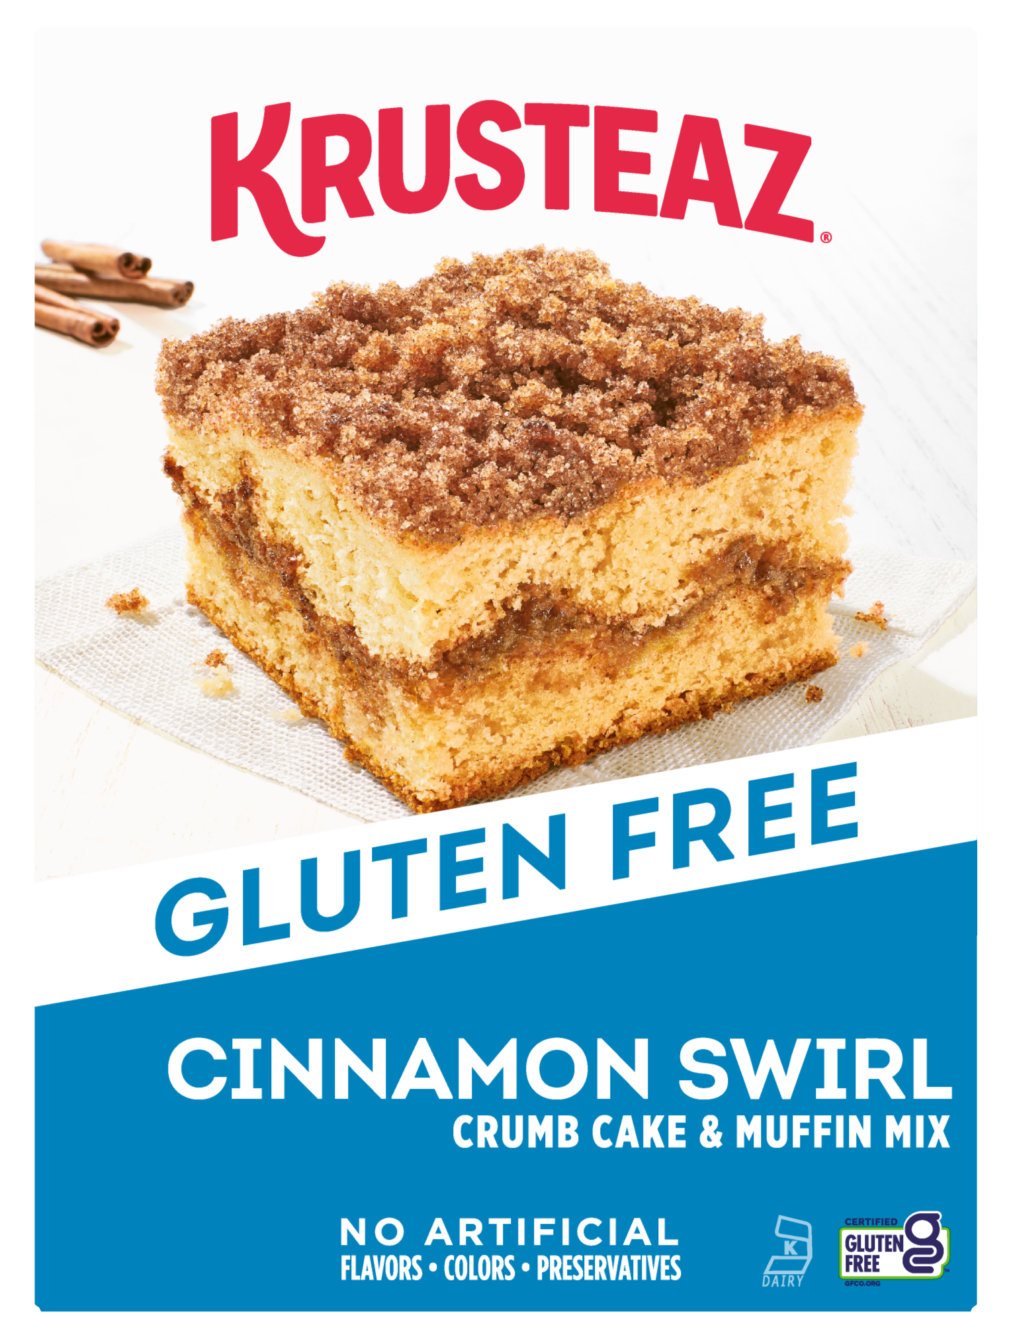 Box of Krusteaz Gluten Free Cinnamon Swirl Crumb Cake & Muffin Mix.